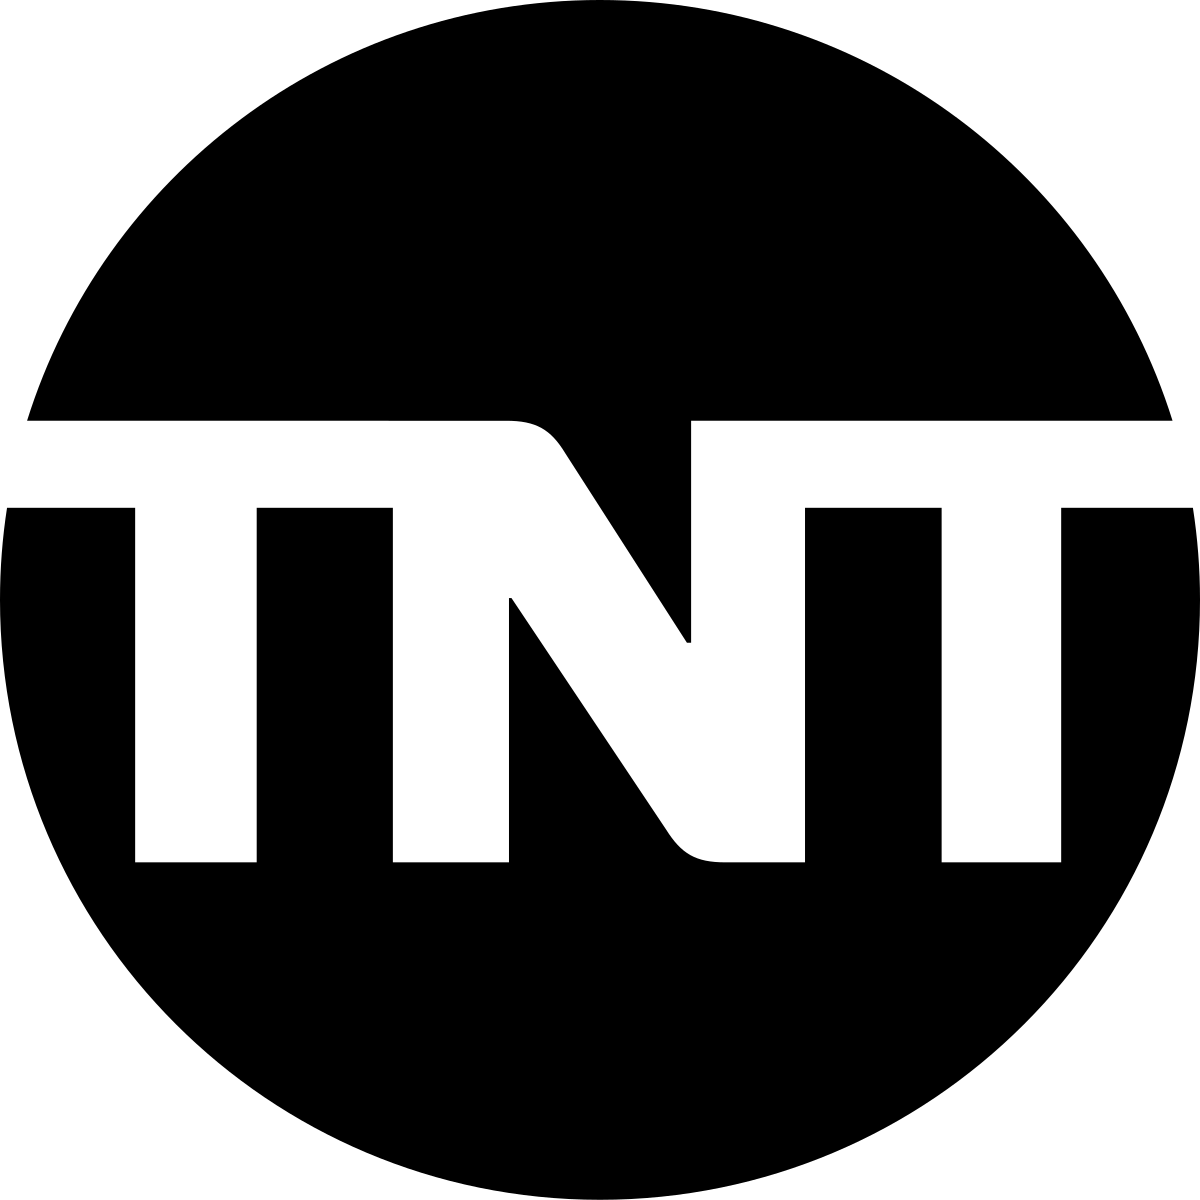 TBS Logo - TNT (U.S. TV network)